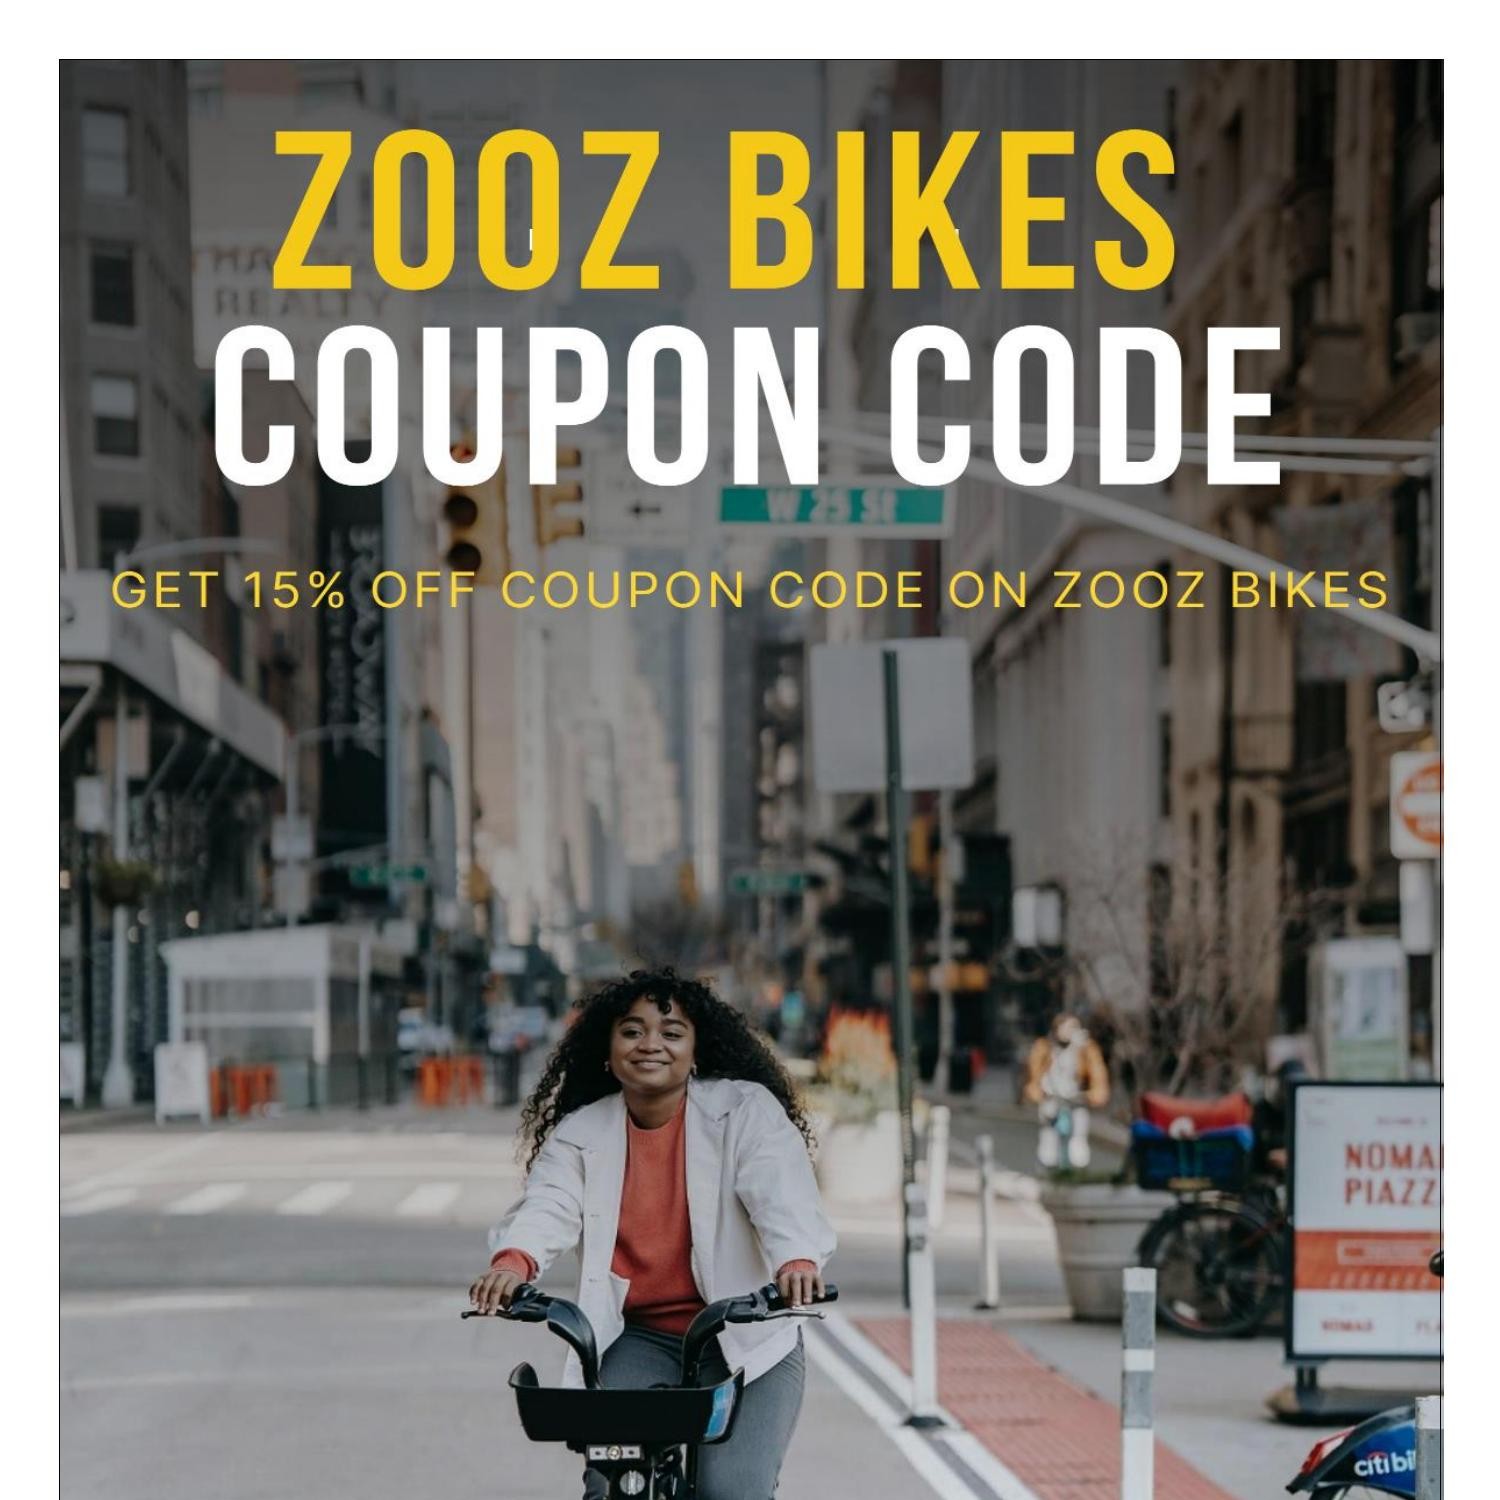 Zooz Bike coupon code.pdf DocDroid